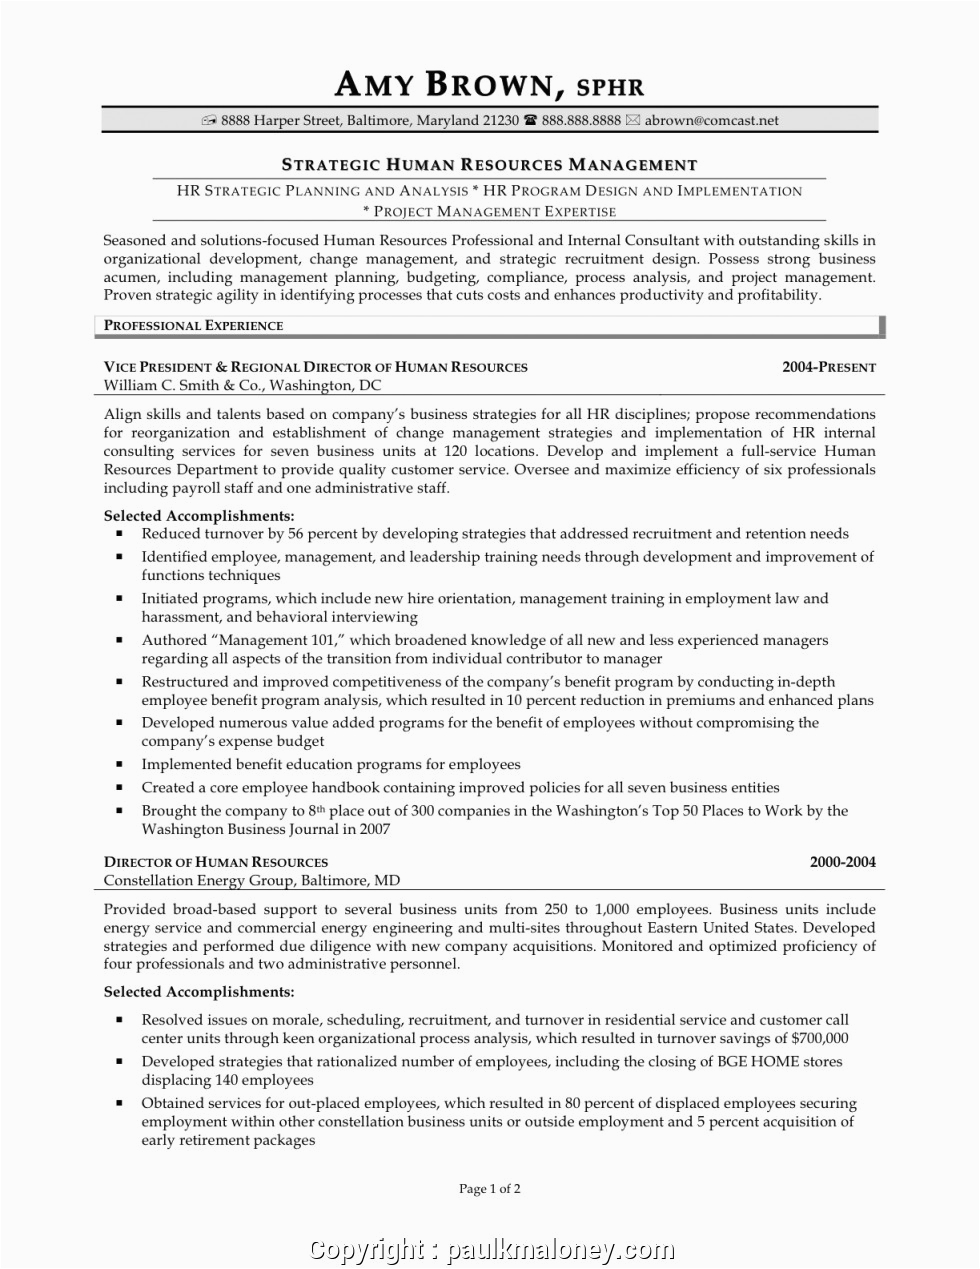 unique vp human resources resume